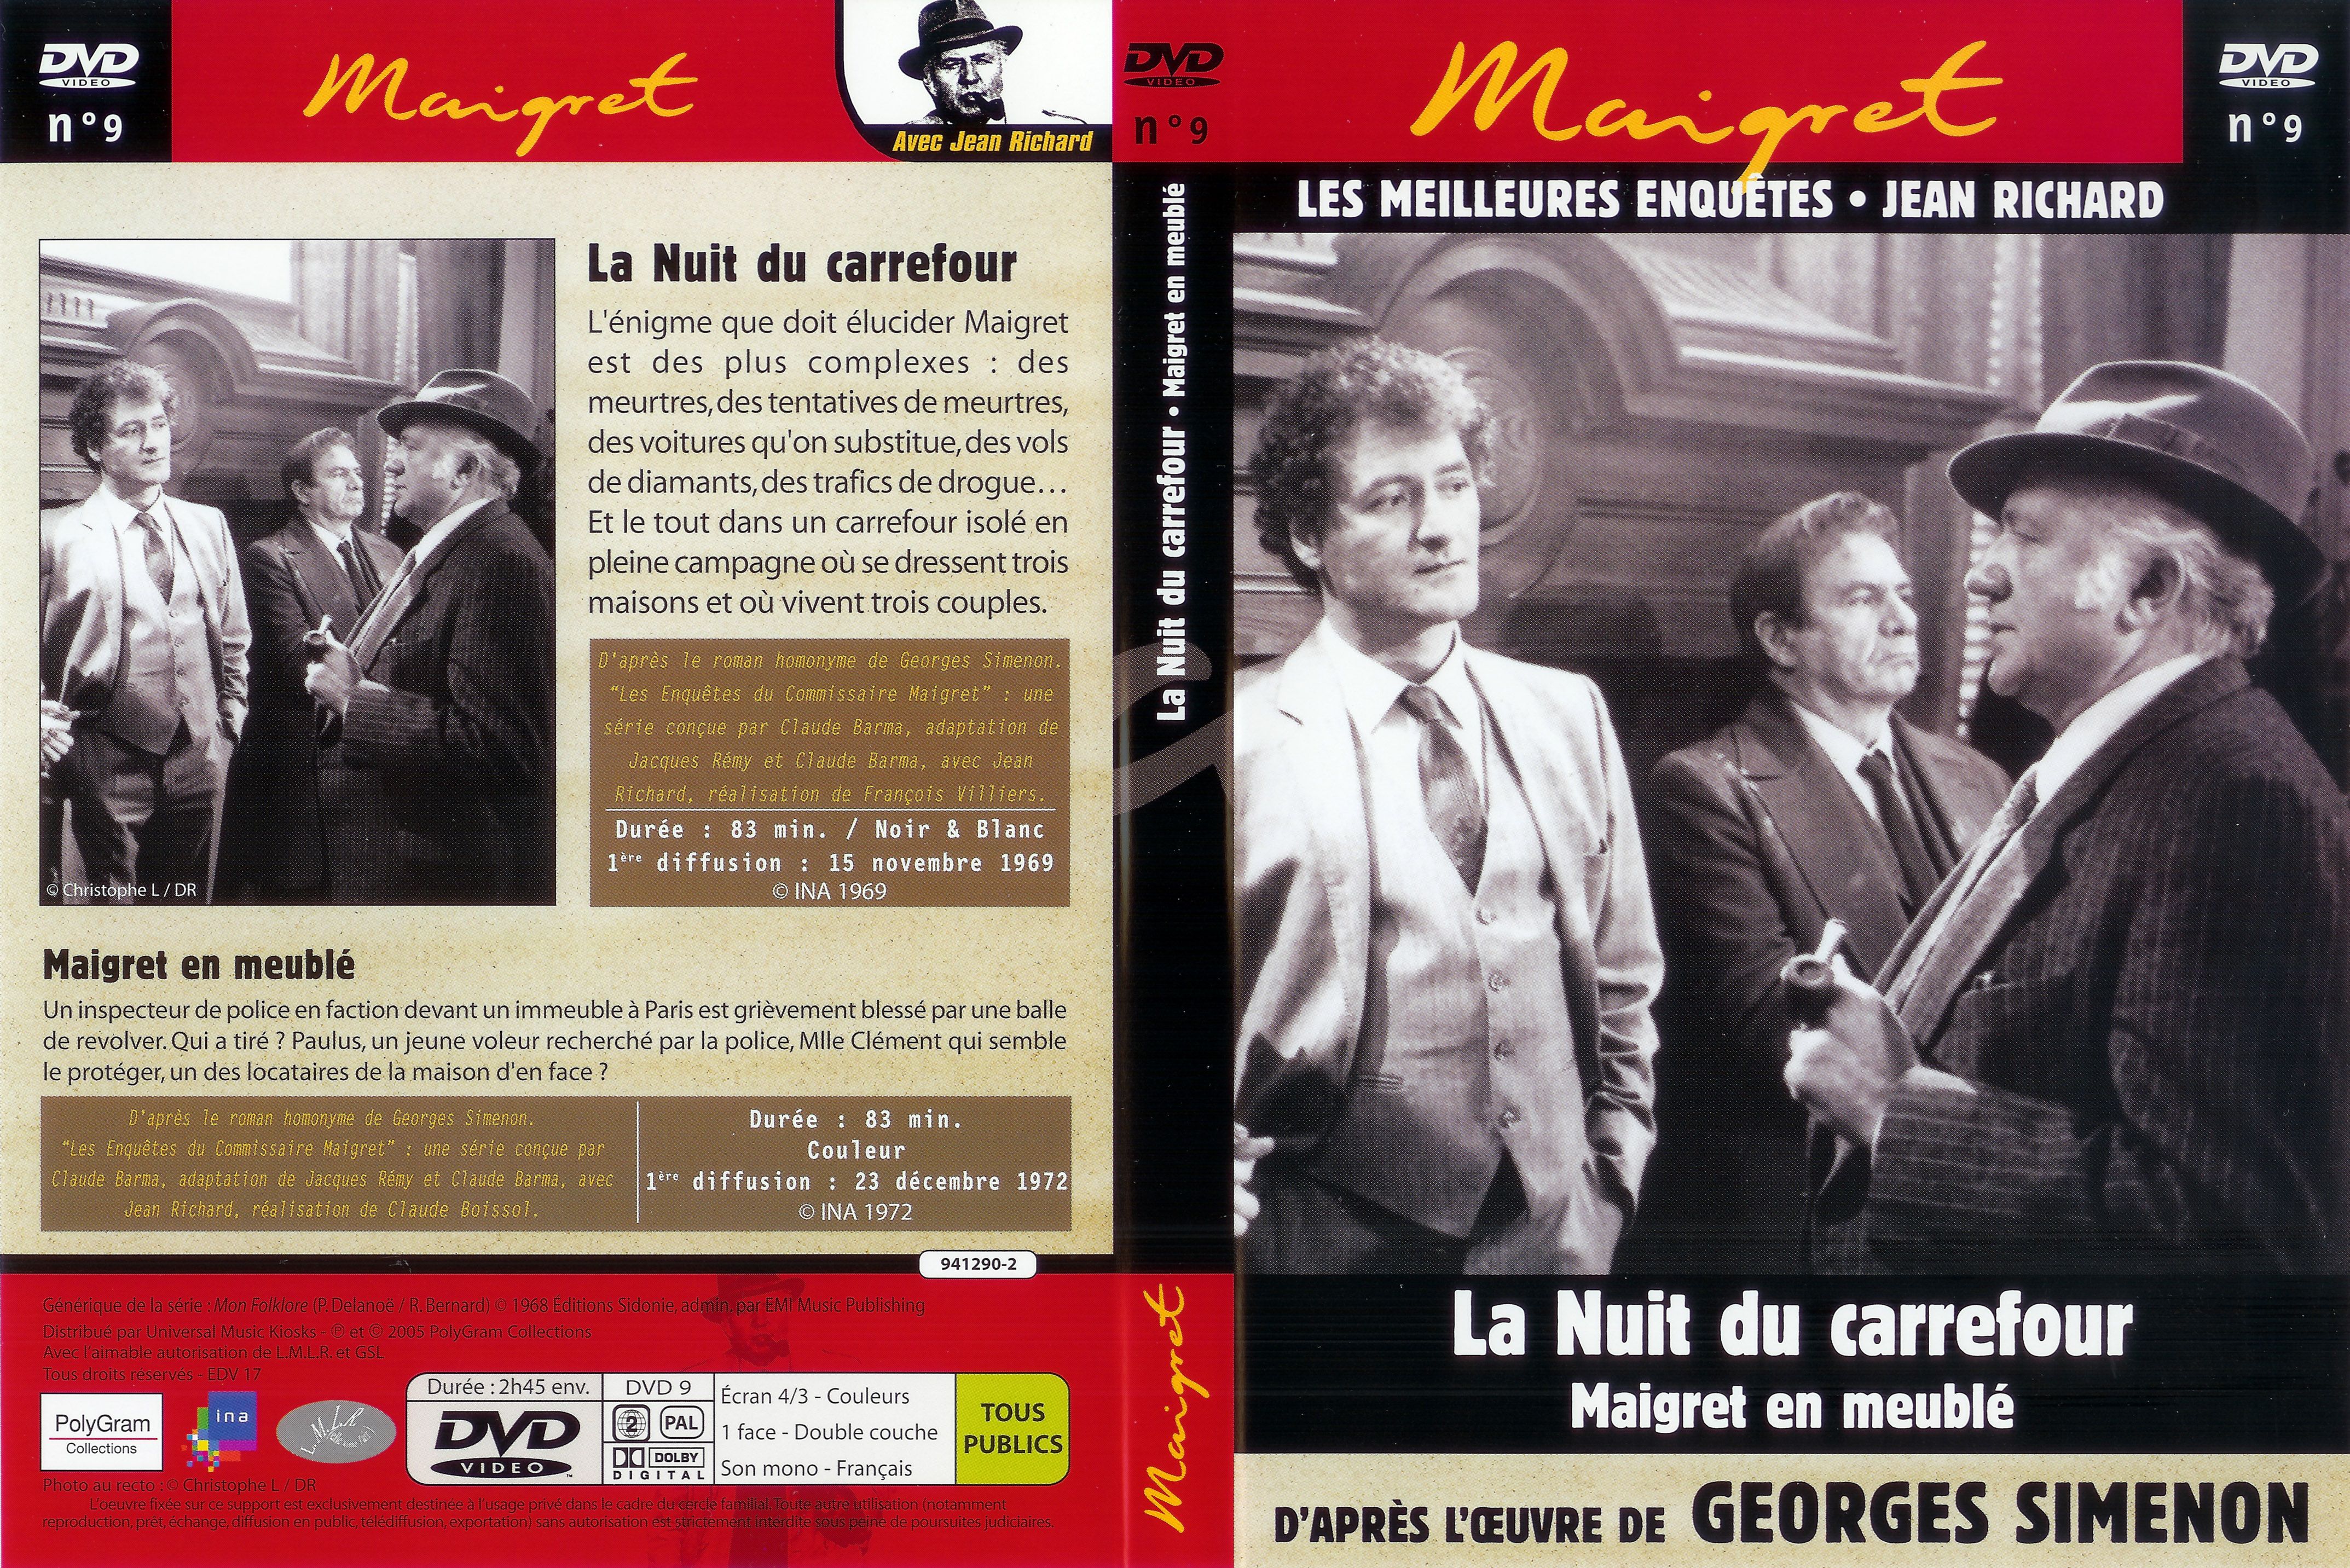 Jaquette DVD Maigret (Jean Richard) vol 09